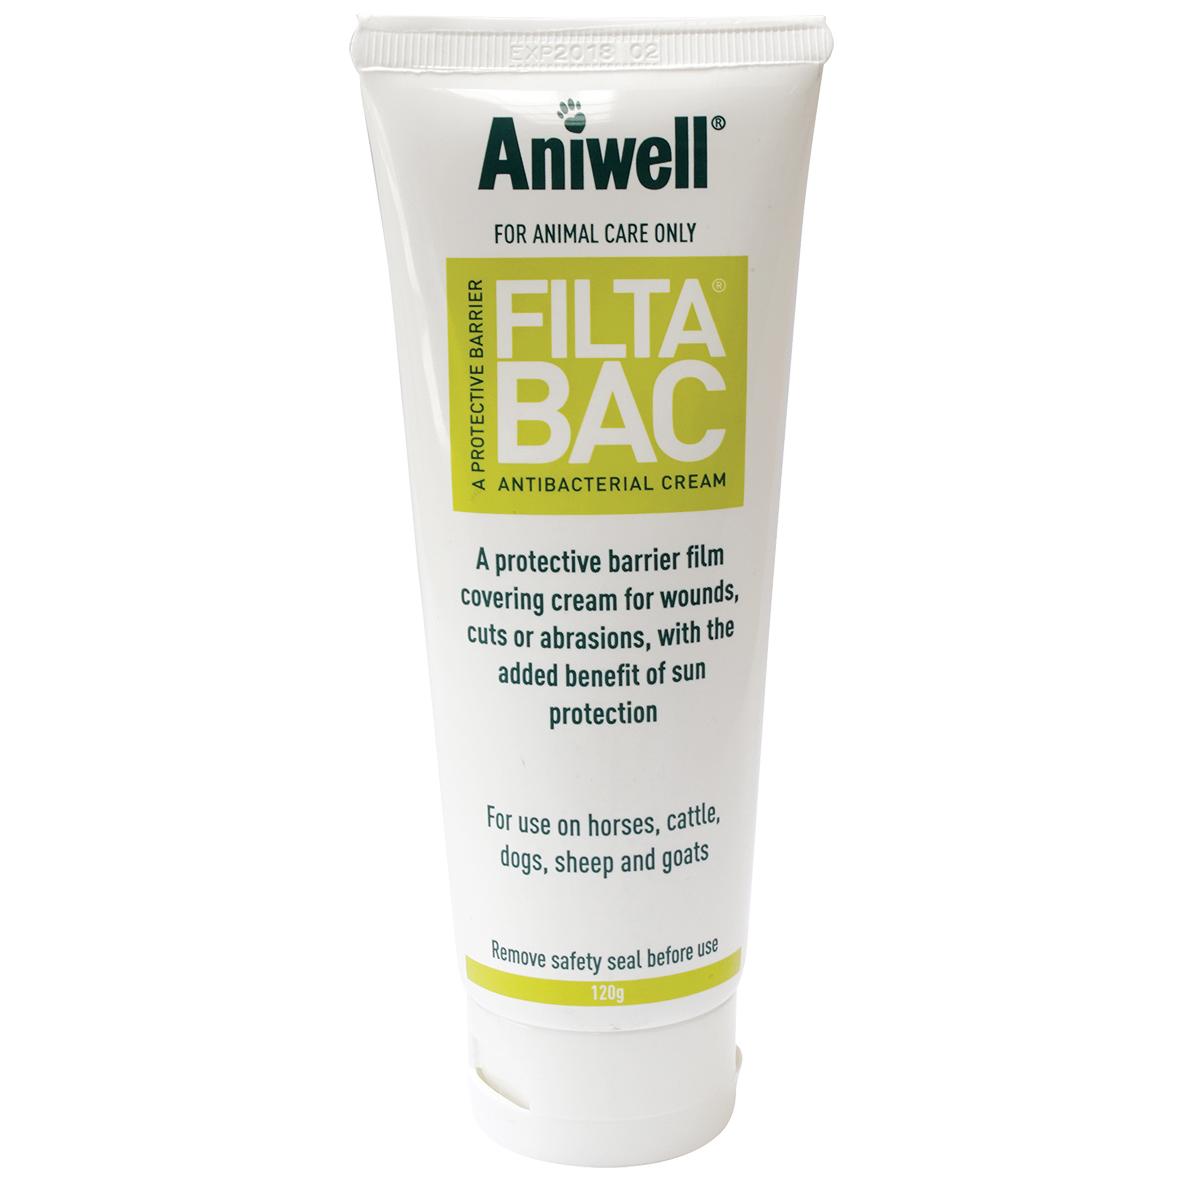 Filta Bac Antibacterial Cream